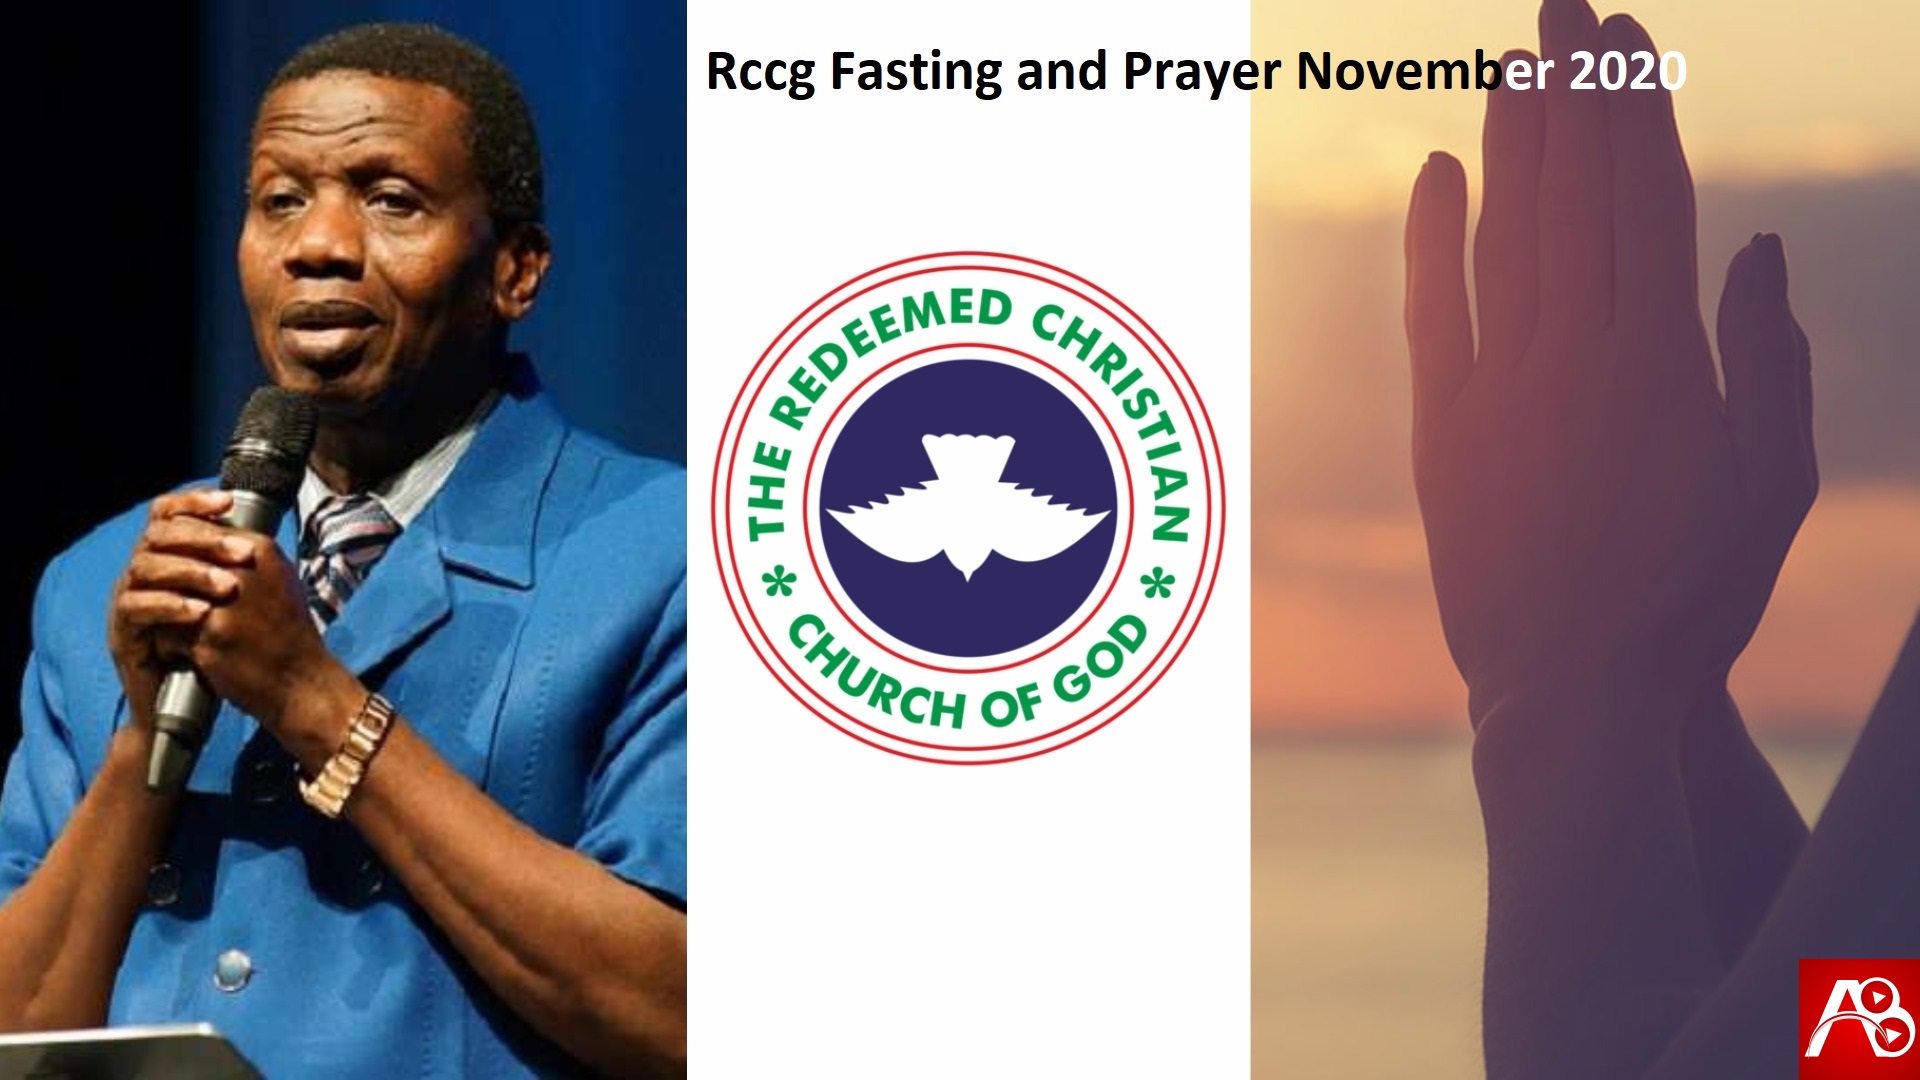 Rccg Fasting and Prayer November 2020 pdf